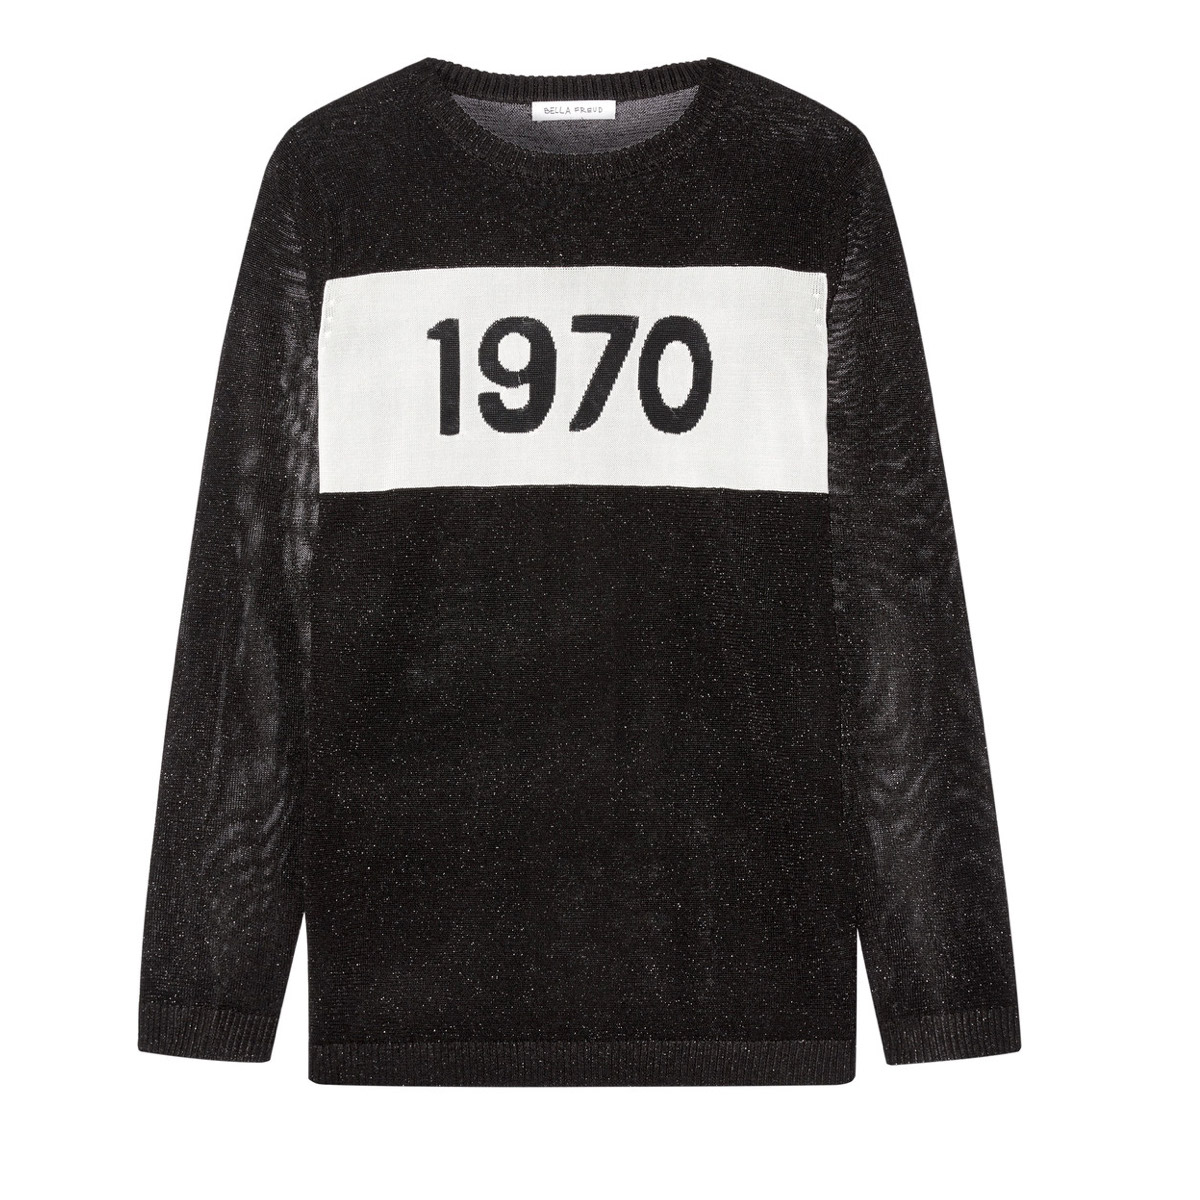 1970 Sweater